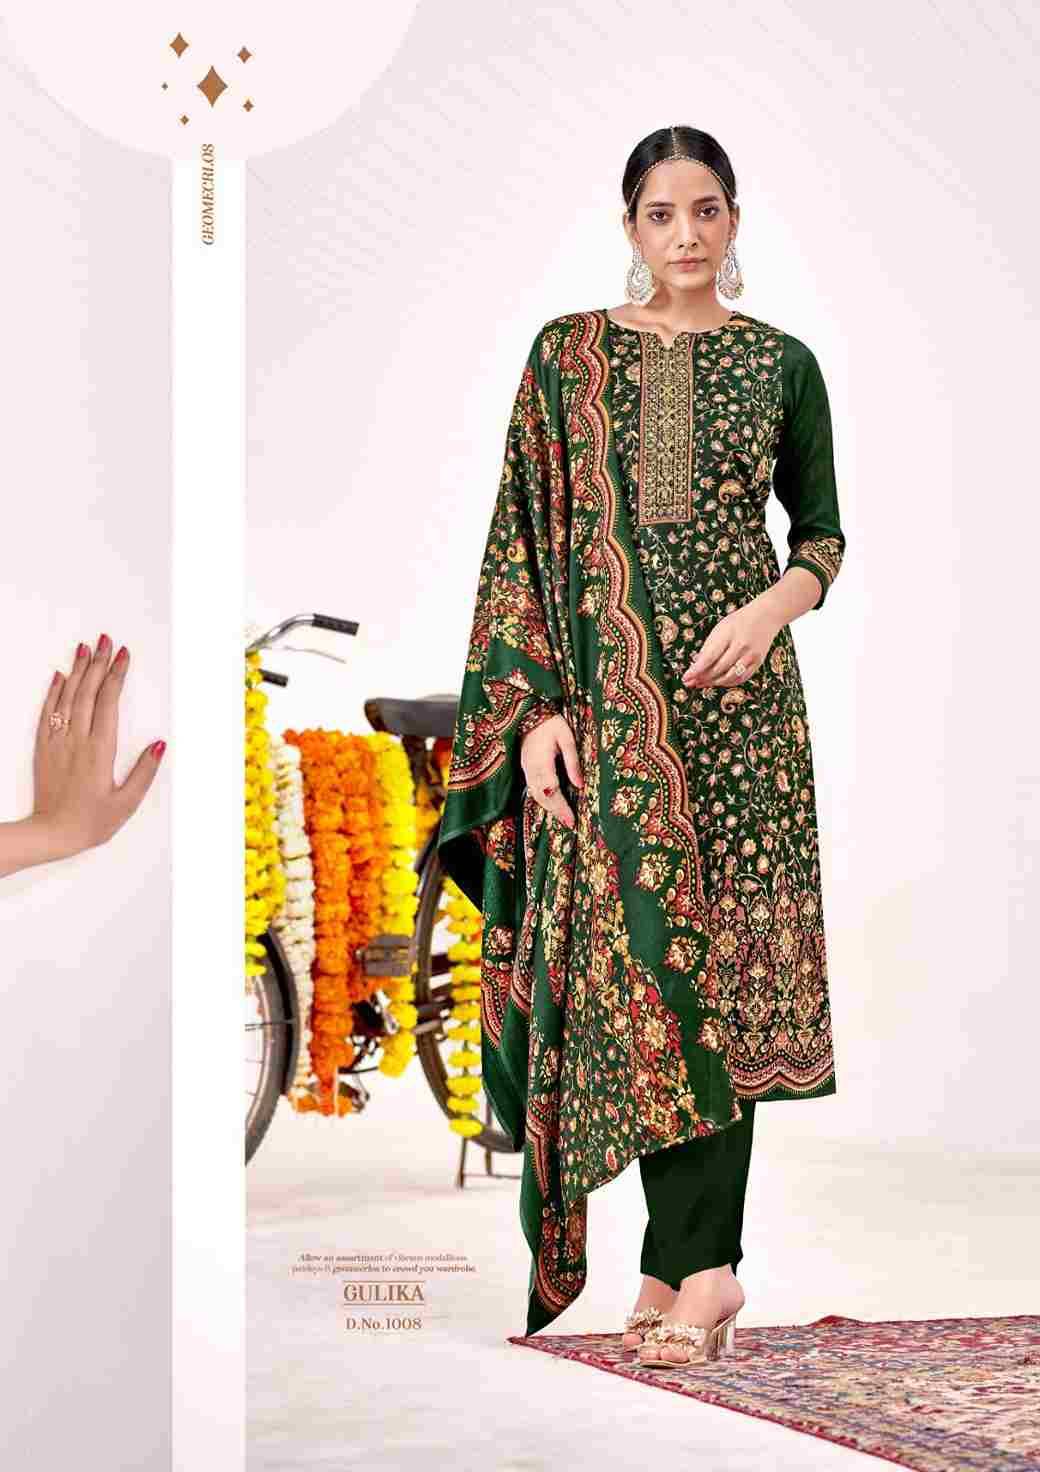 Gulika By Roli Moli 1001 To 1008 Series Beautiful Stylish Festive Suits Fancy Colorful Casual Wear & Ethnic Wear & Ready To Wear Pure Pashmina Print Dresses At Wholesale Price